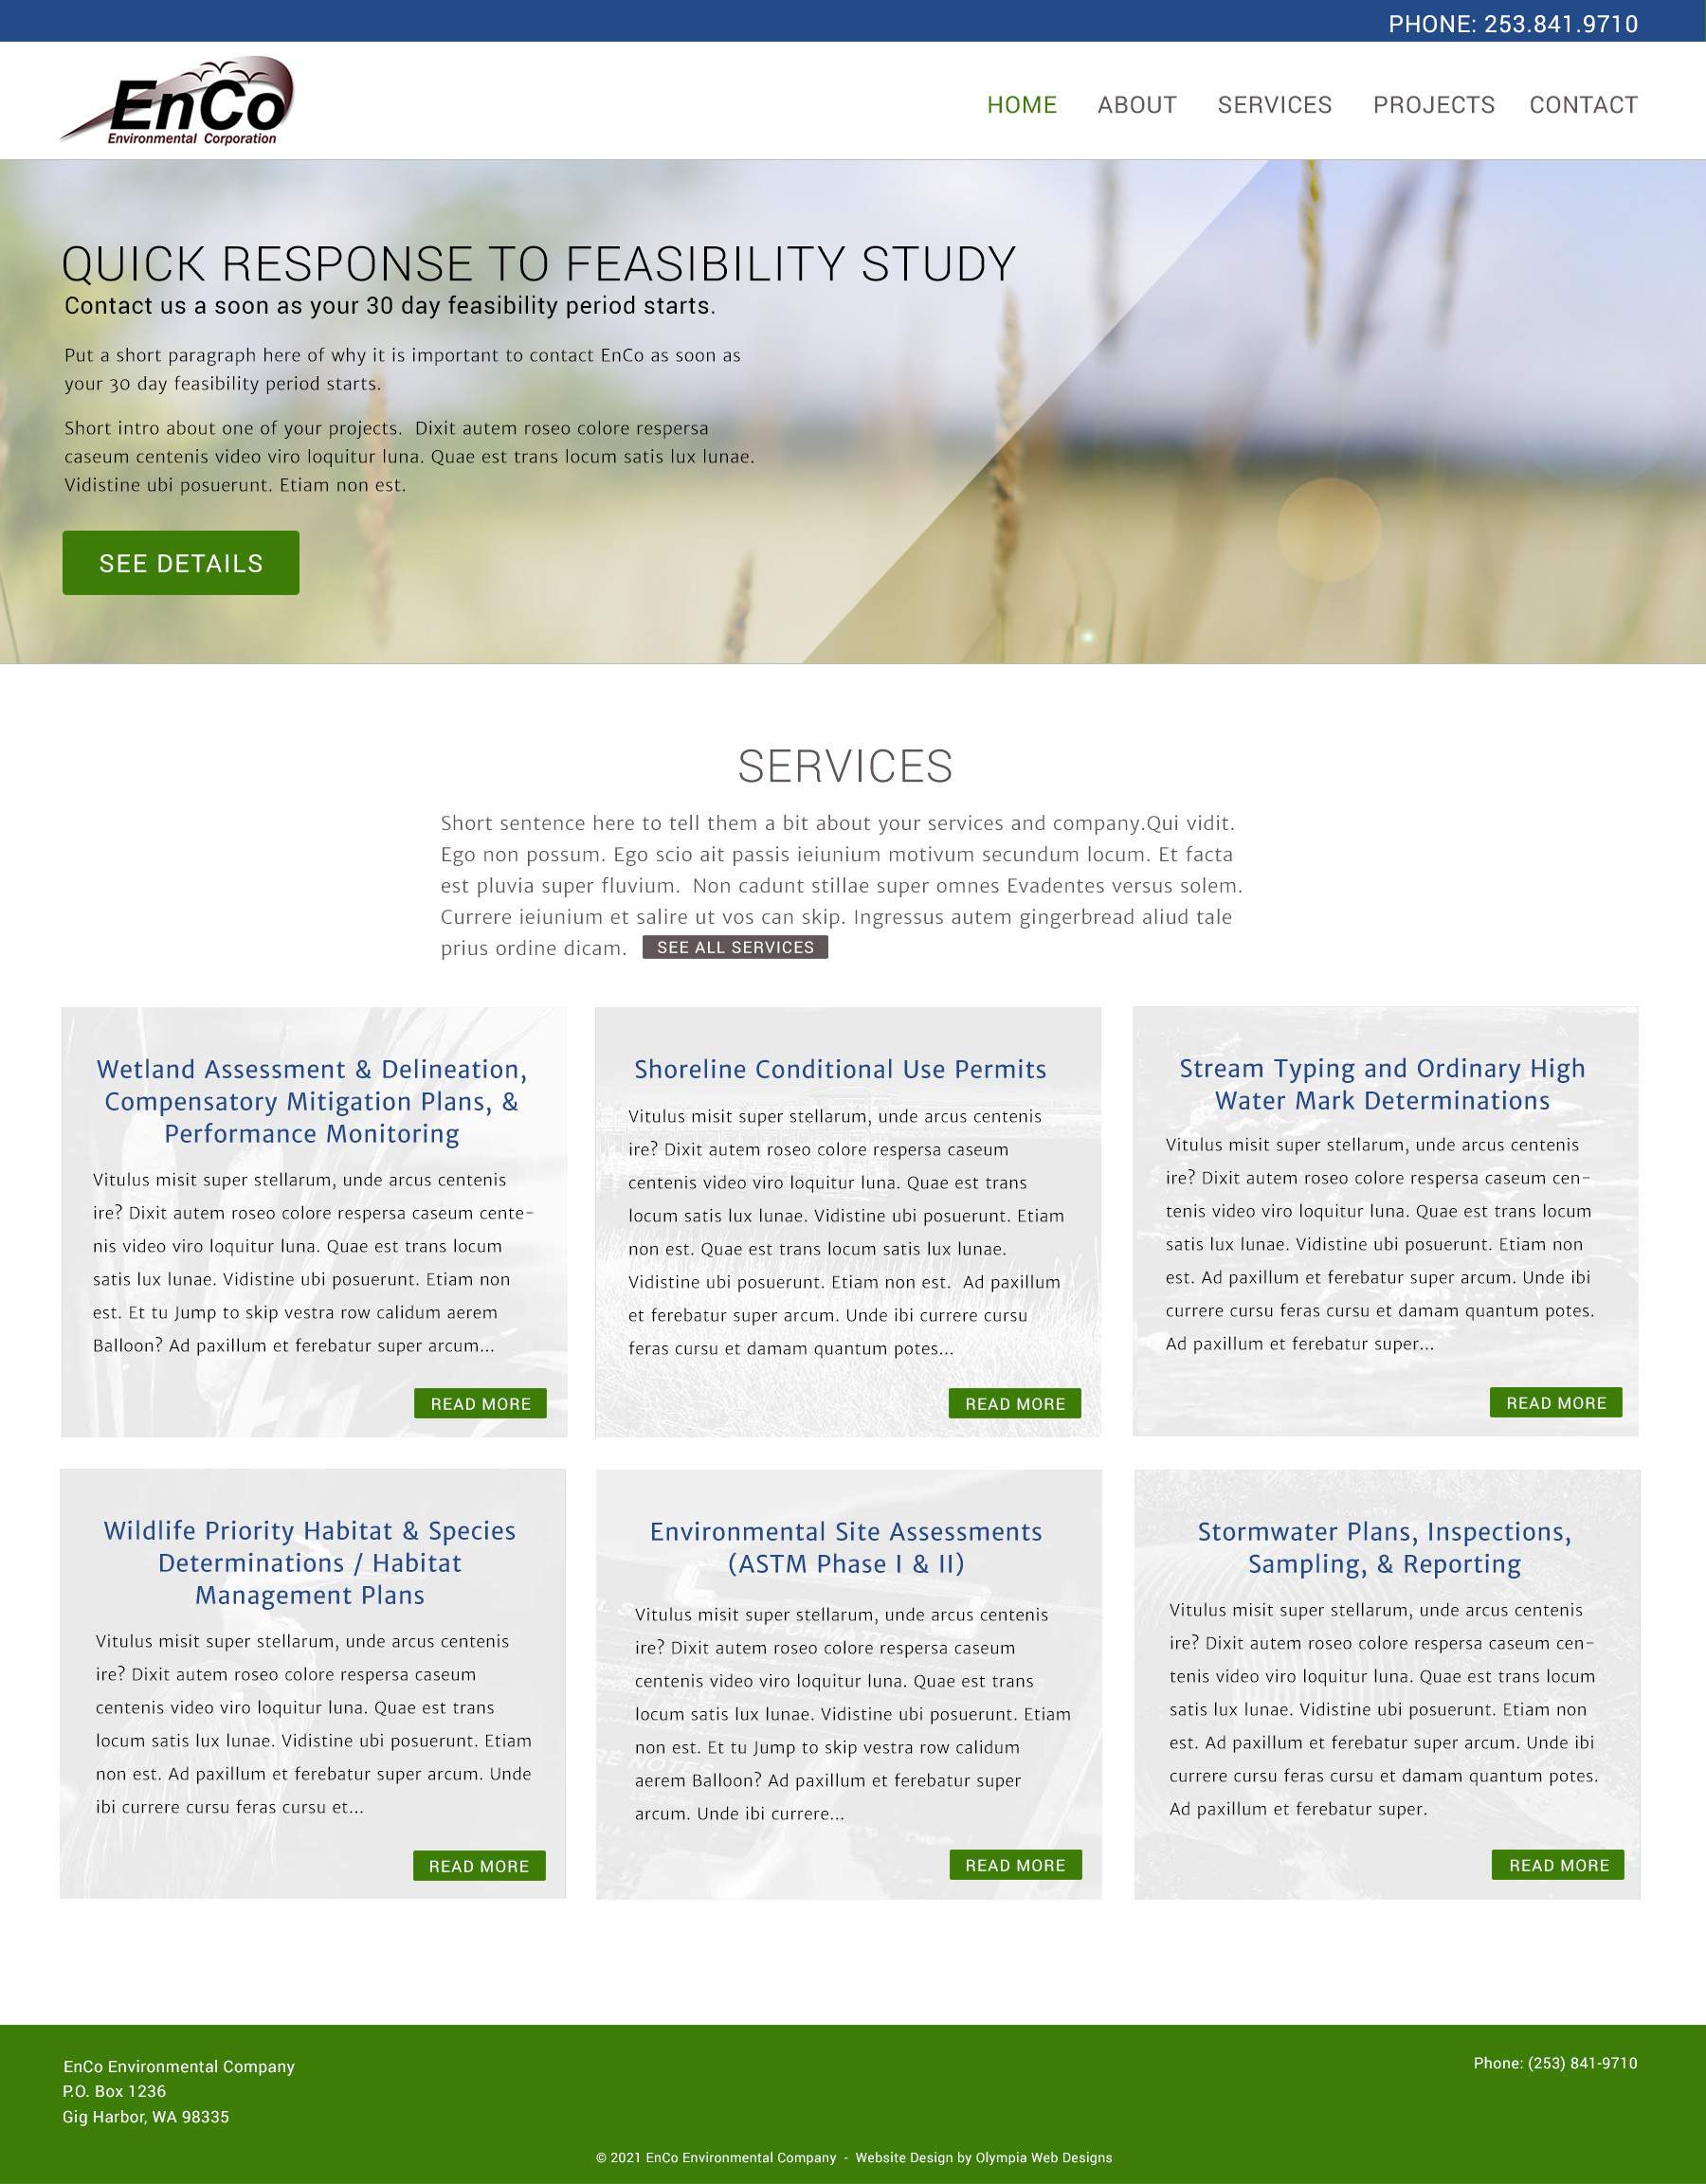 Enco Environmental Corporation - Home Page Design Mockup